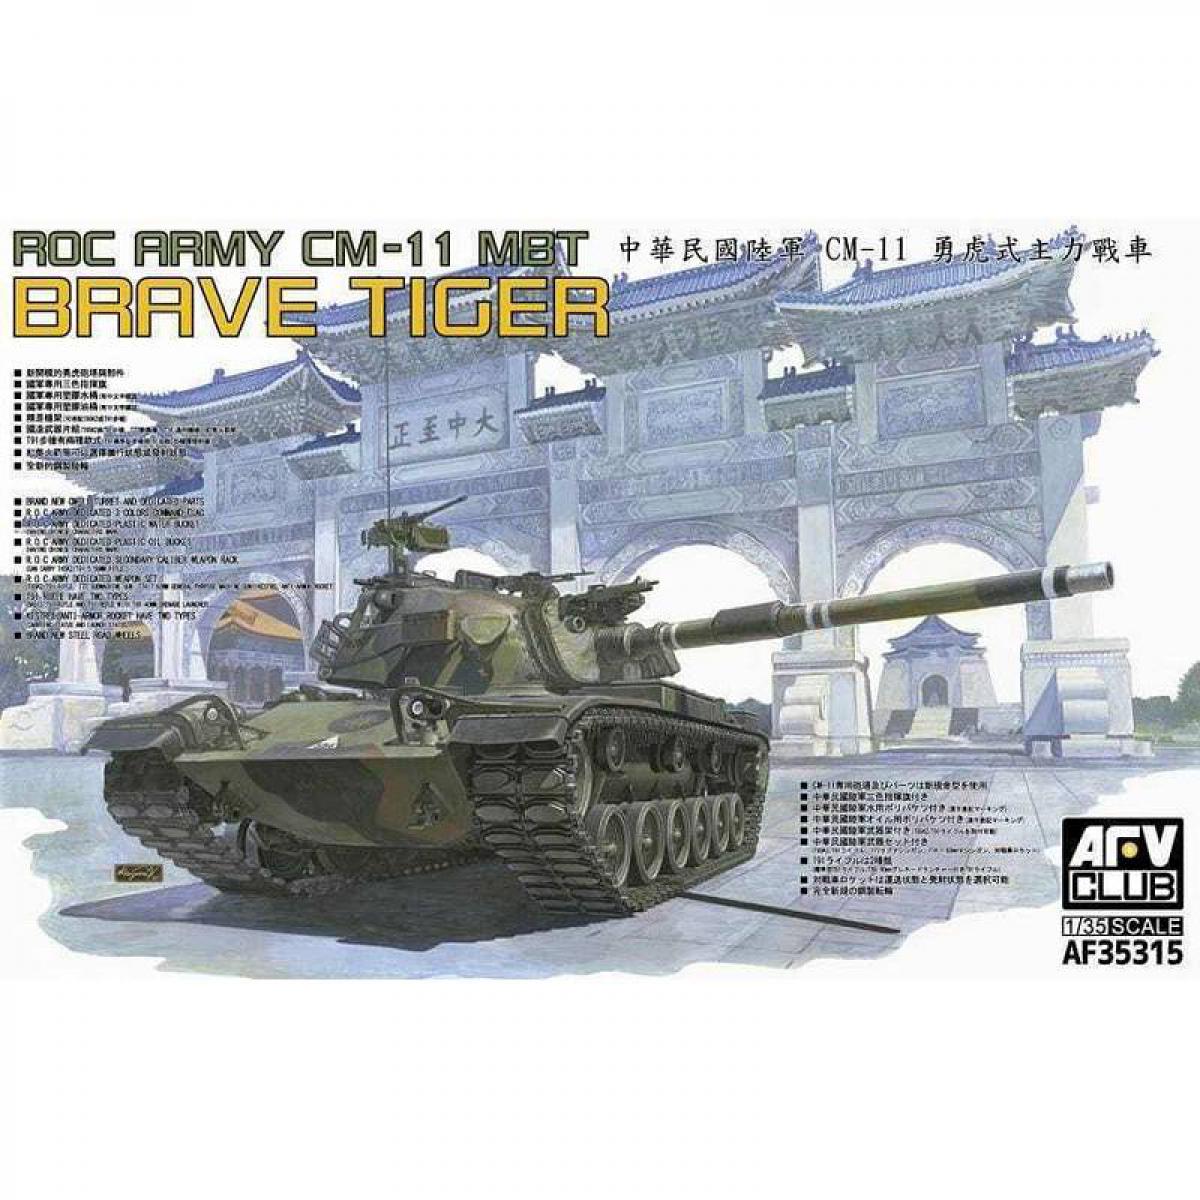 Afv Club - Maquette Char Roc Army Cm-11 Brave Tiger - Chars